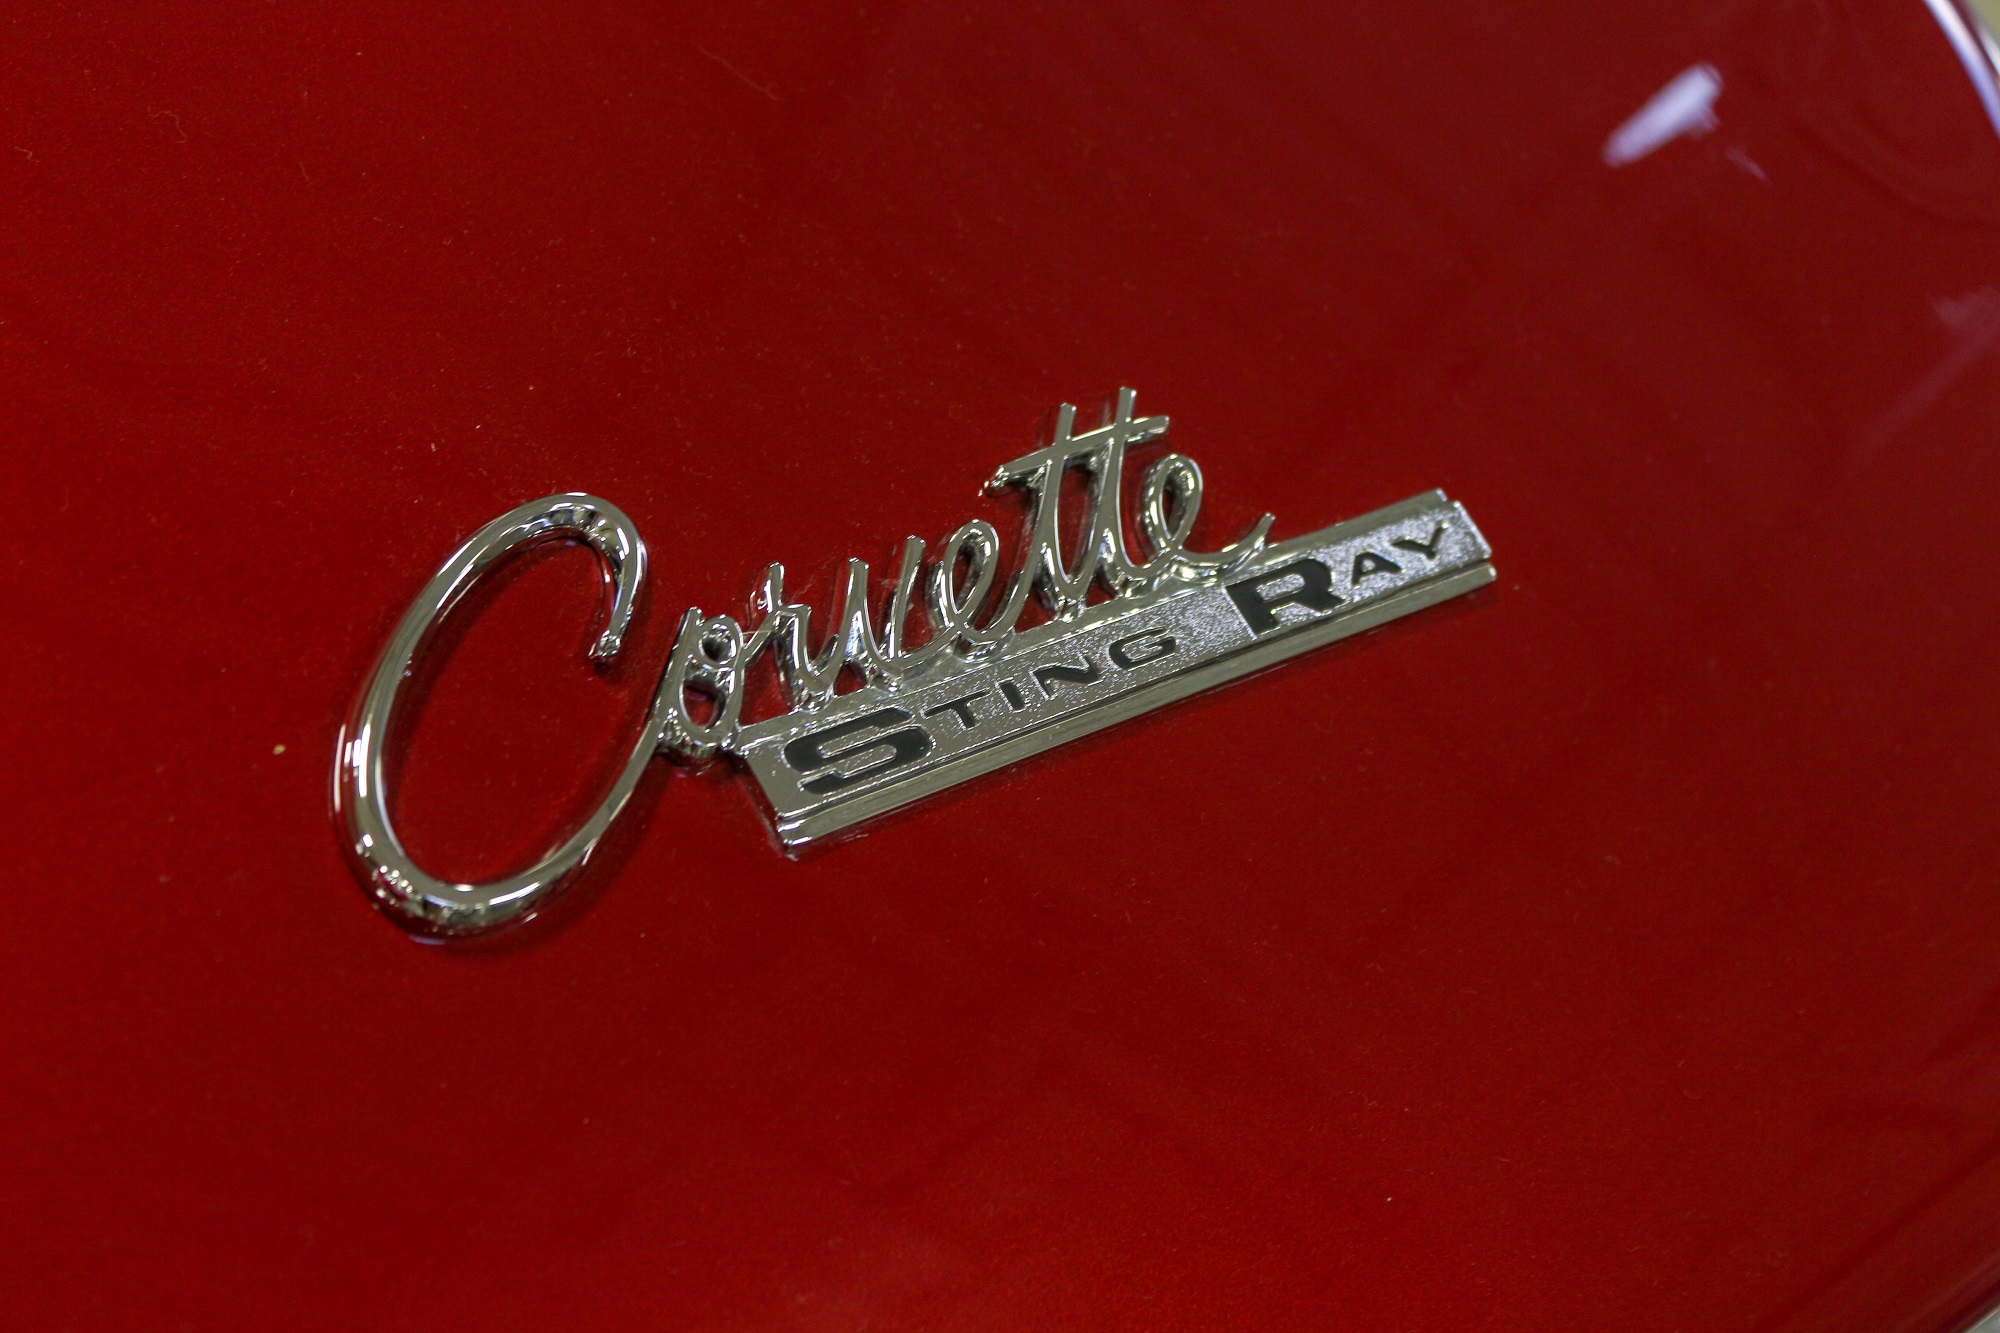 Corvetteforum.com Ken Lingenfelter Collection Corvette Gallery